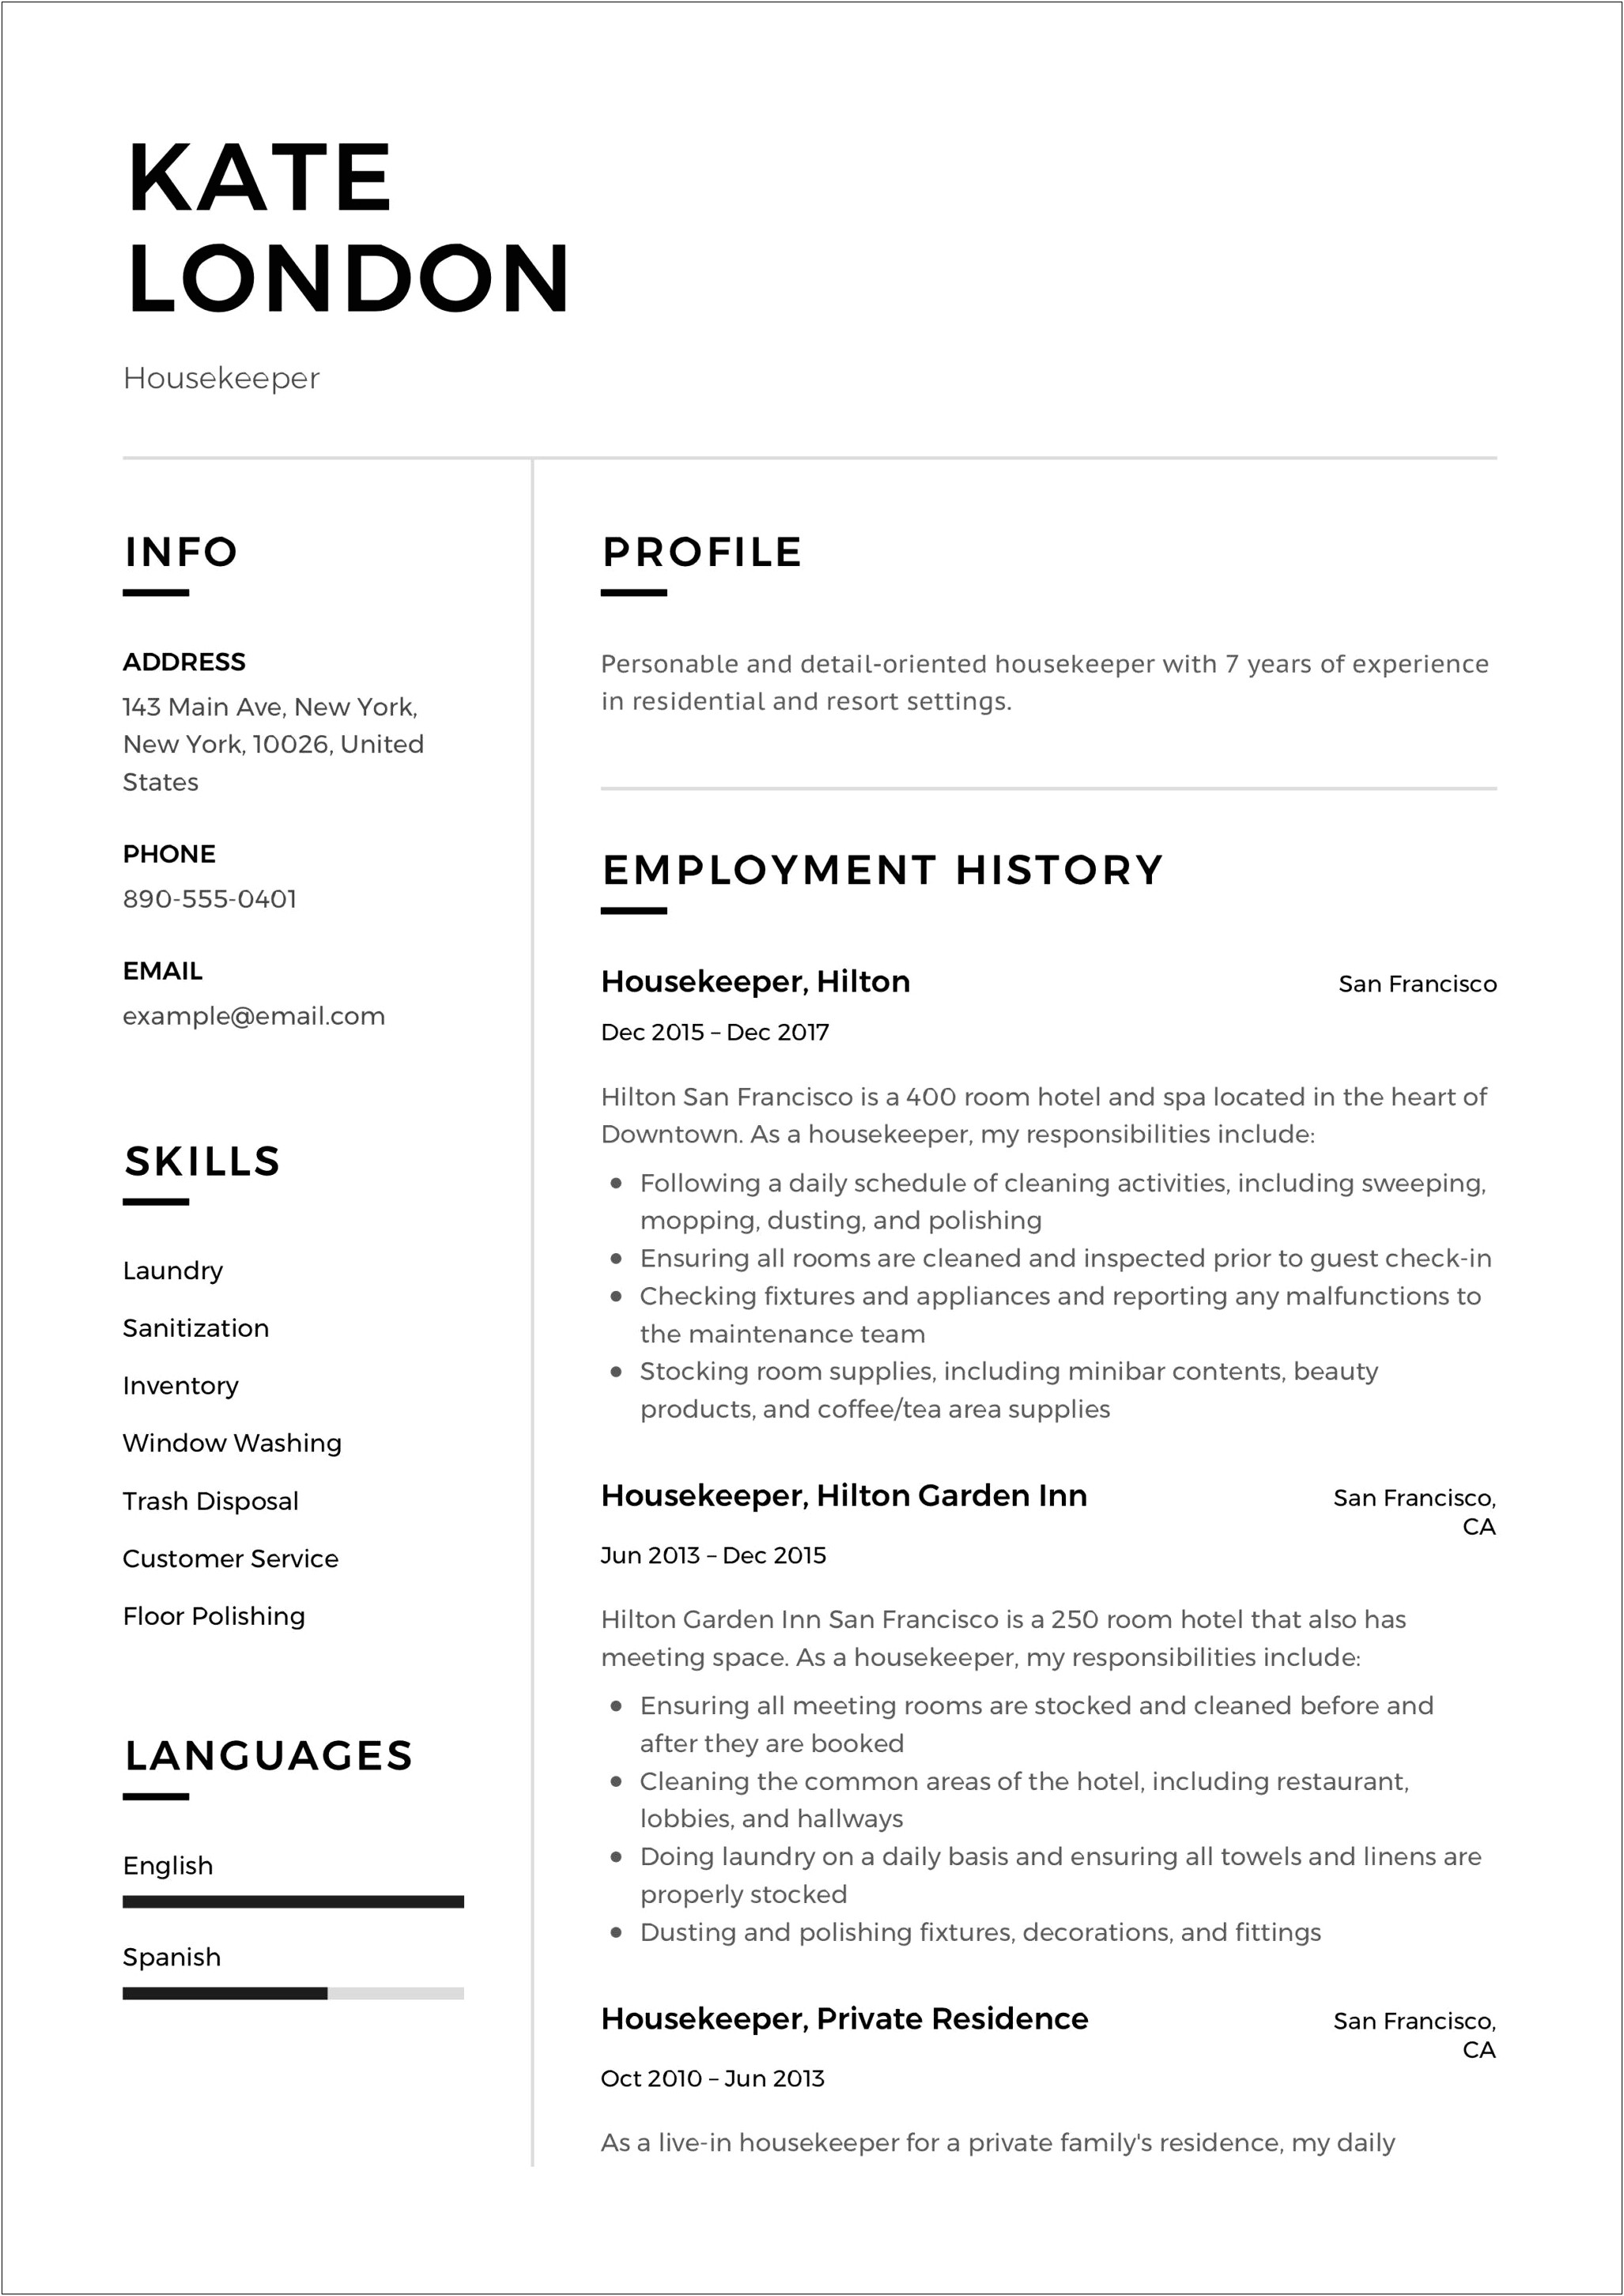 Housewife Job Description For Resume